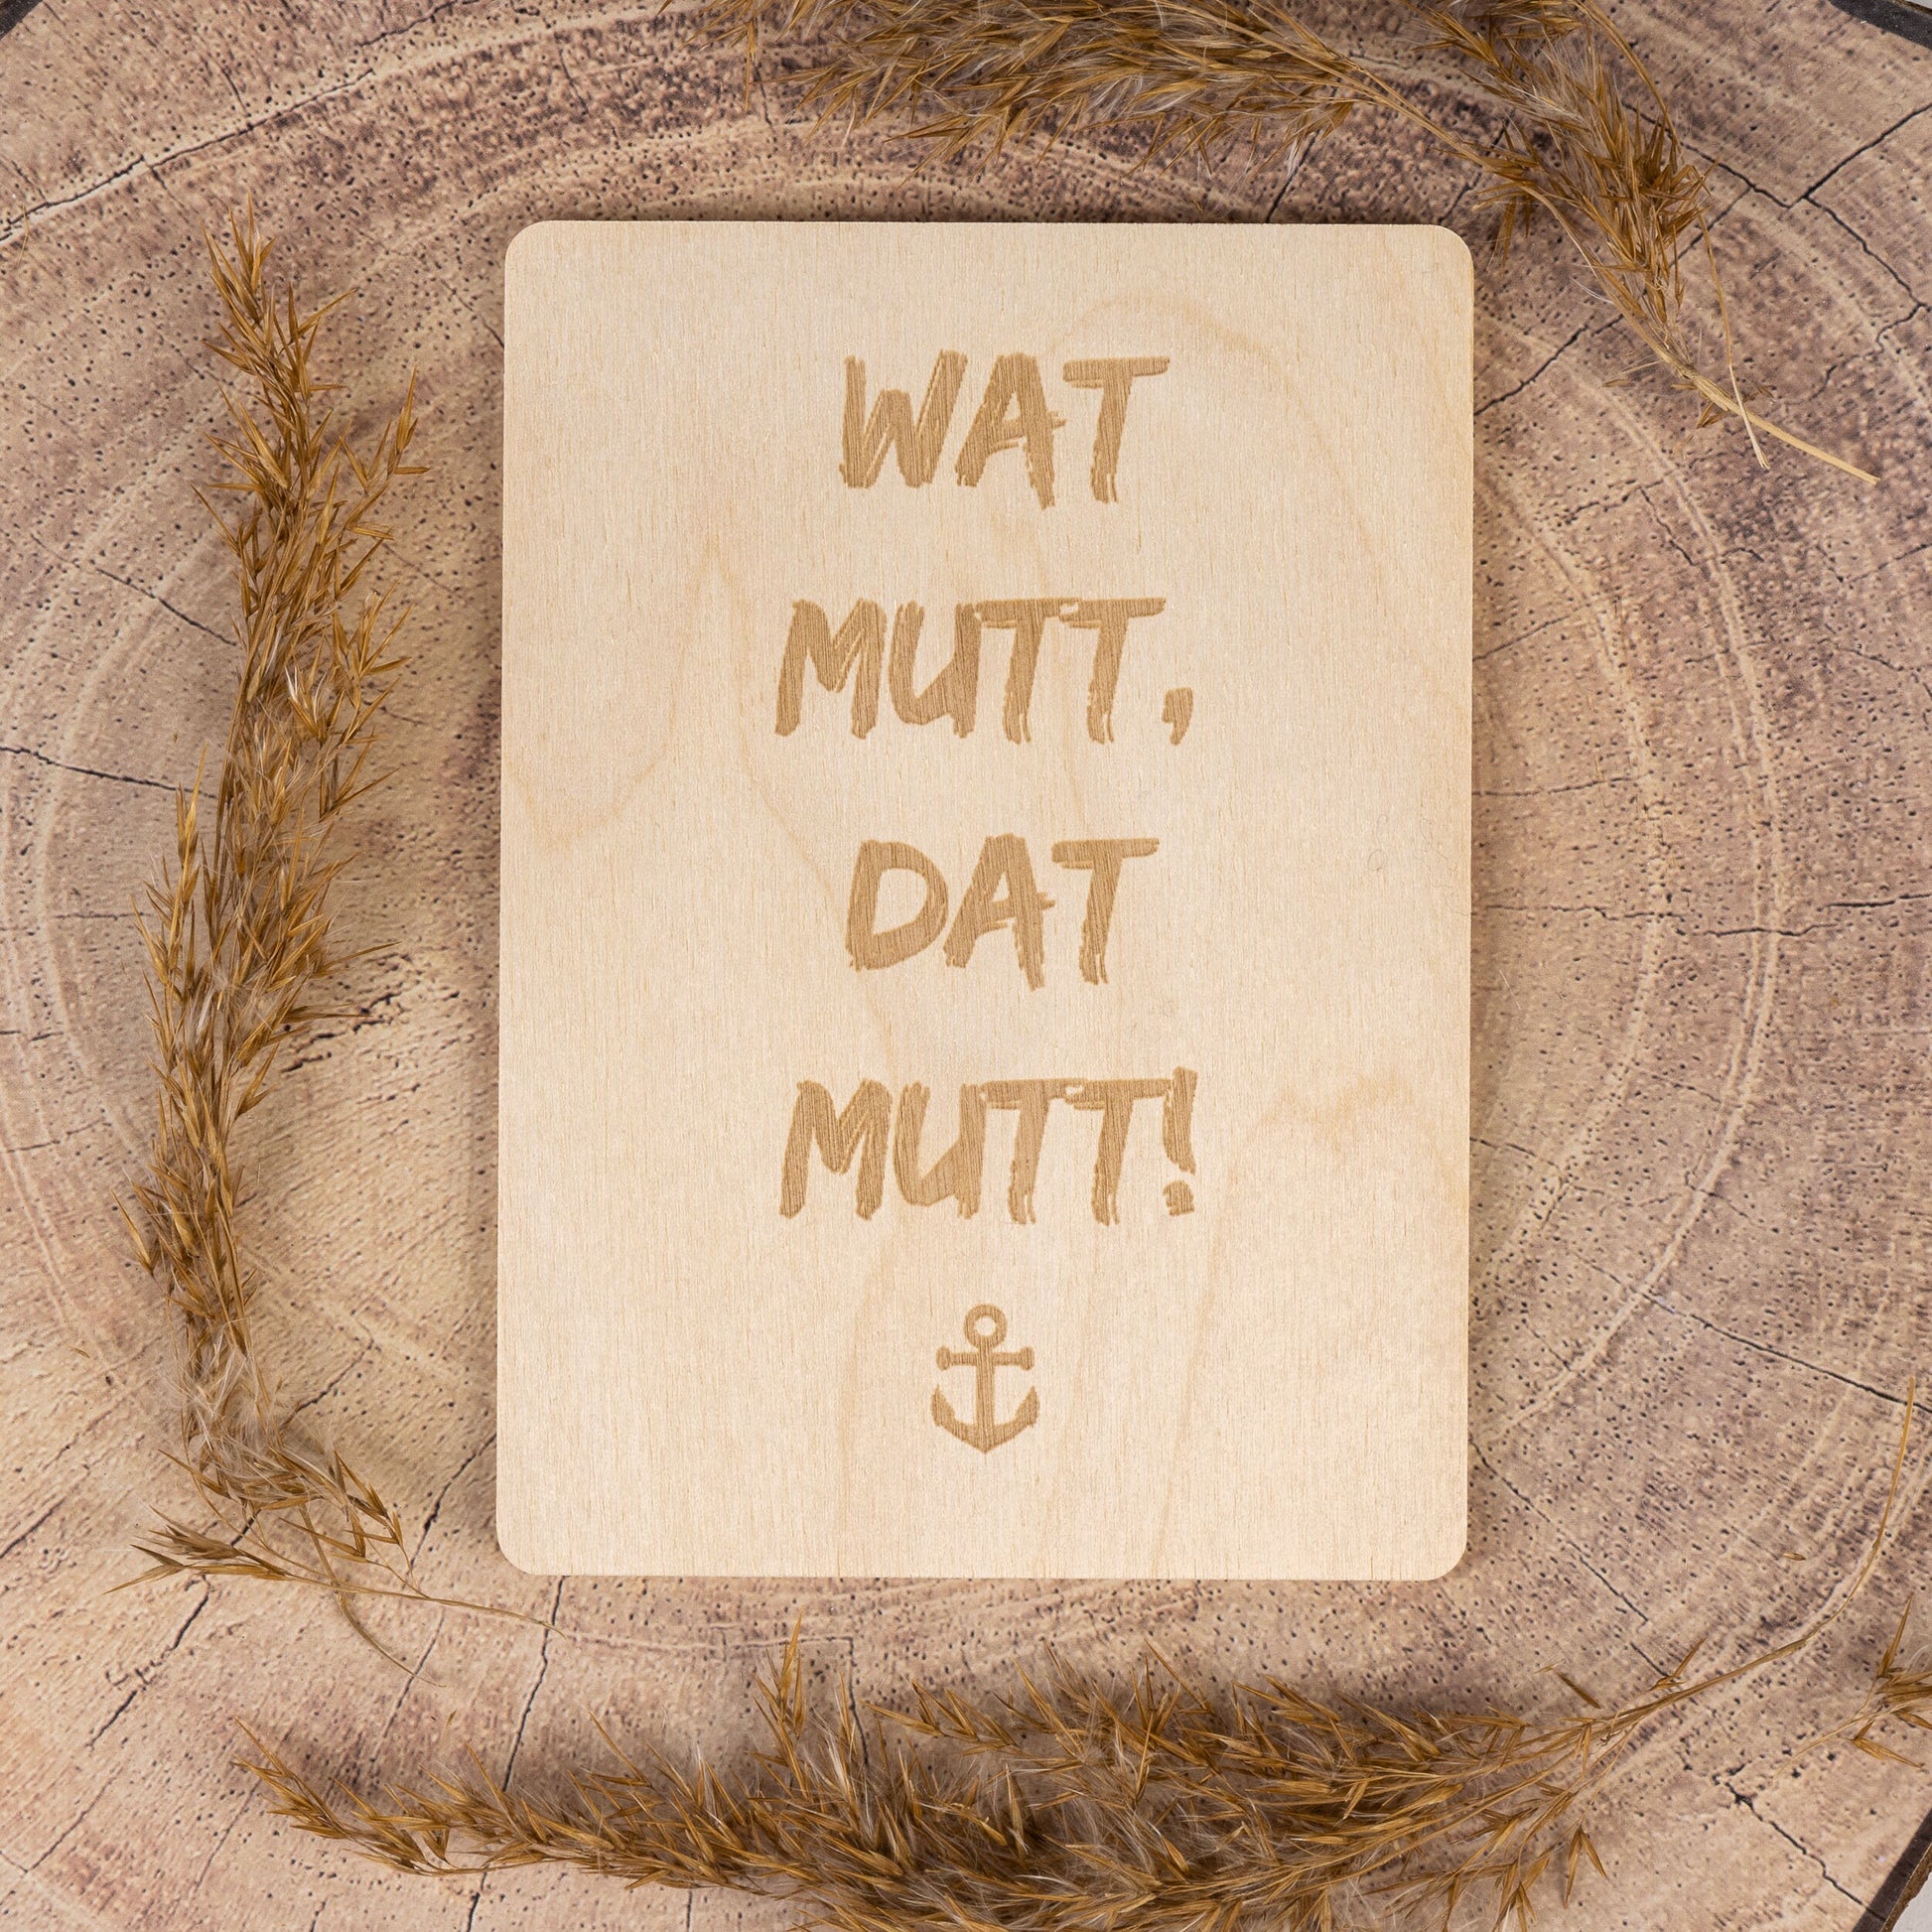 Holzpostkarte • wat mutt dat mutt • maritim • Holzkarte • Postkarte mit maritimem Motiv - Lasergravur